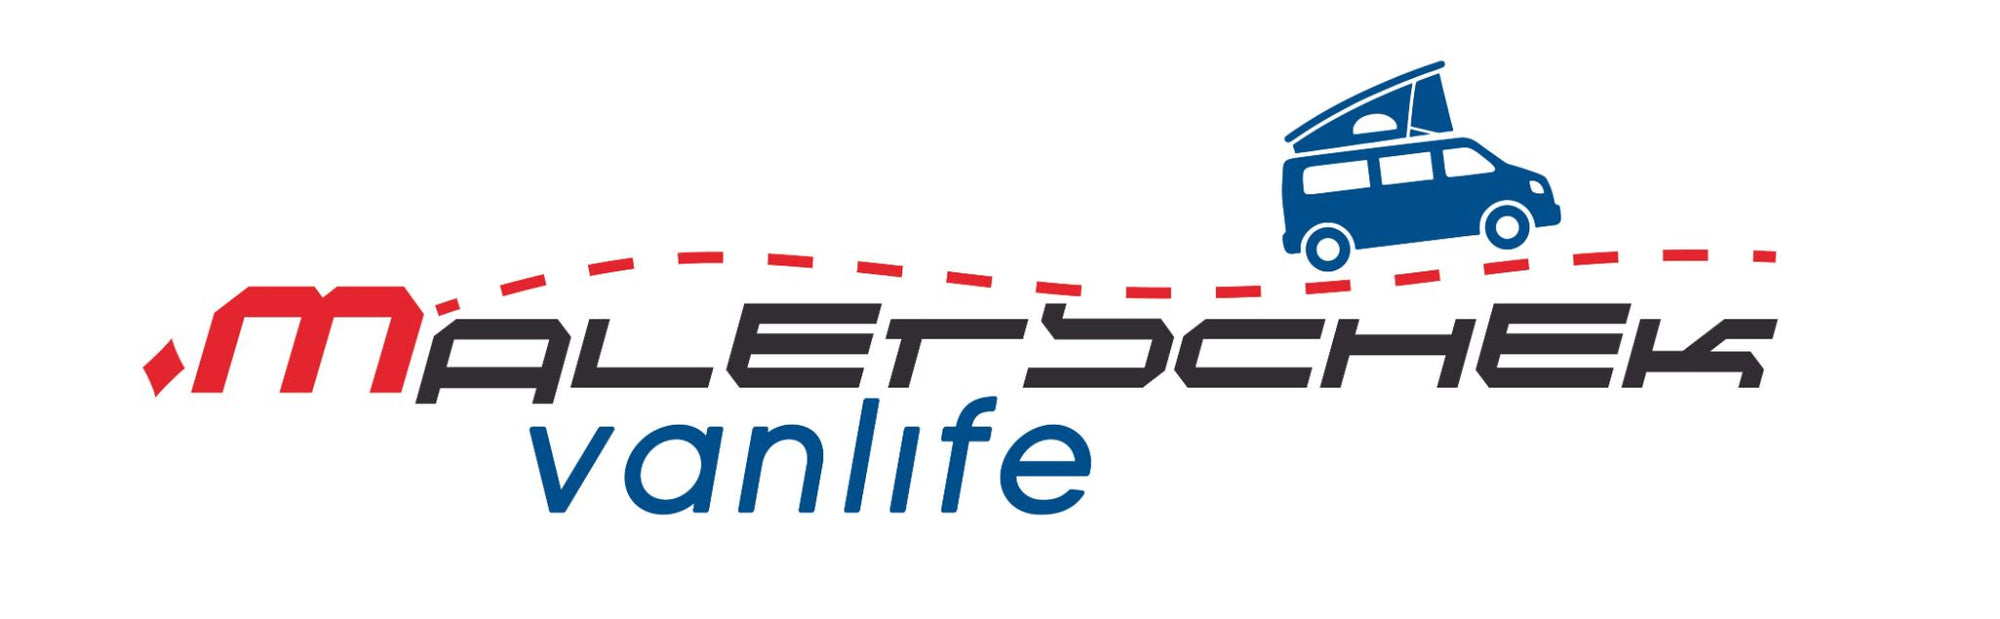 Vanlife_Logo_Maletschek